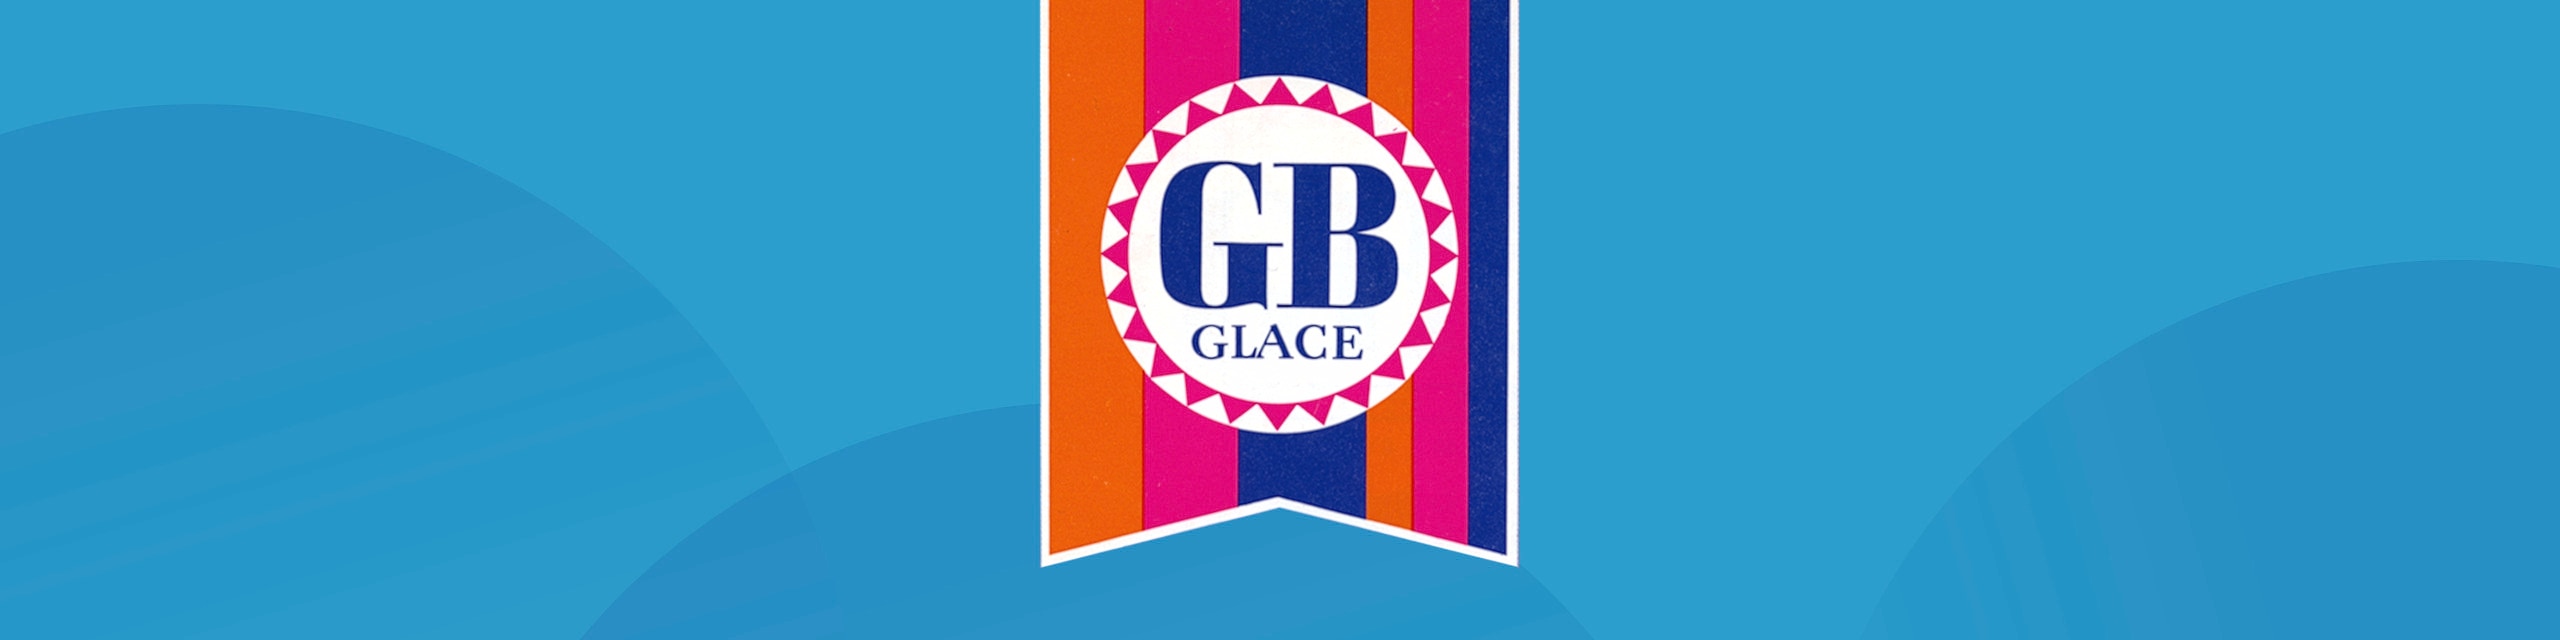 Gammal GB Glace logotyp